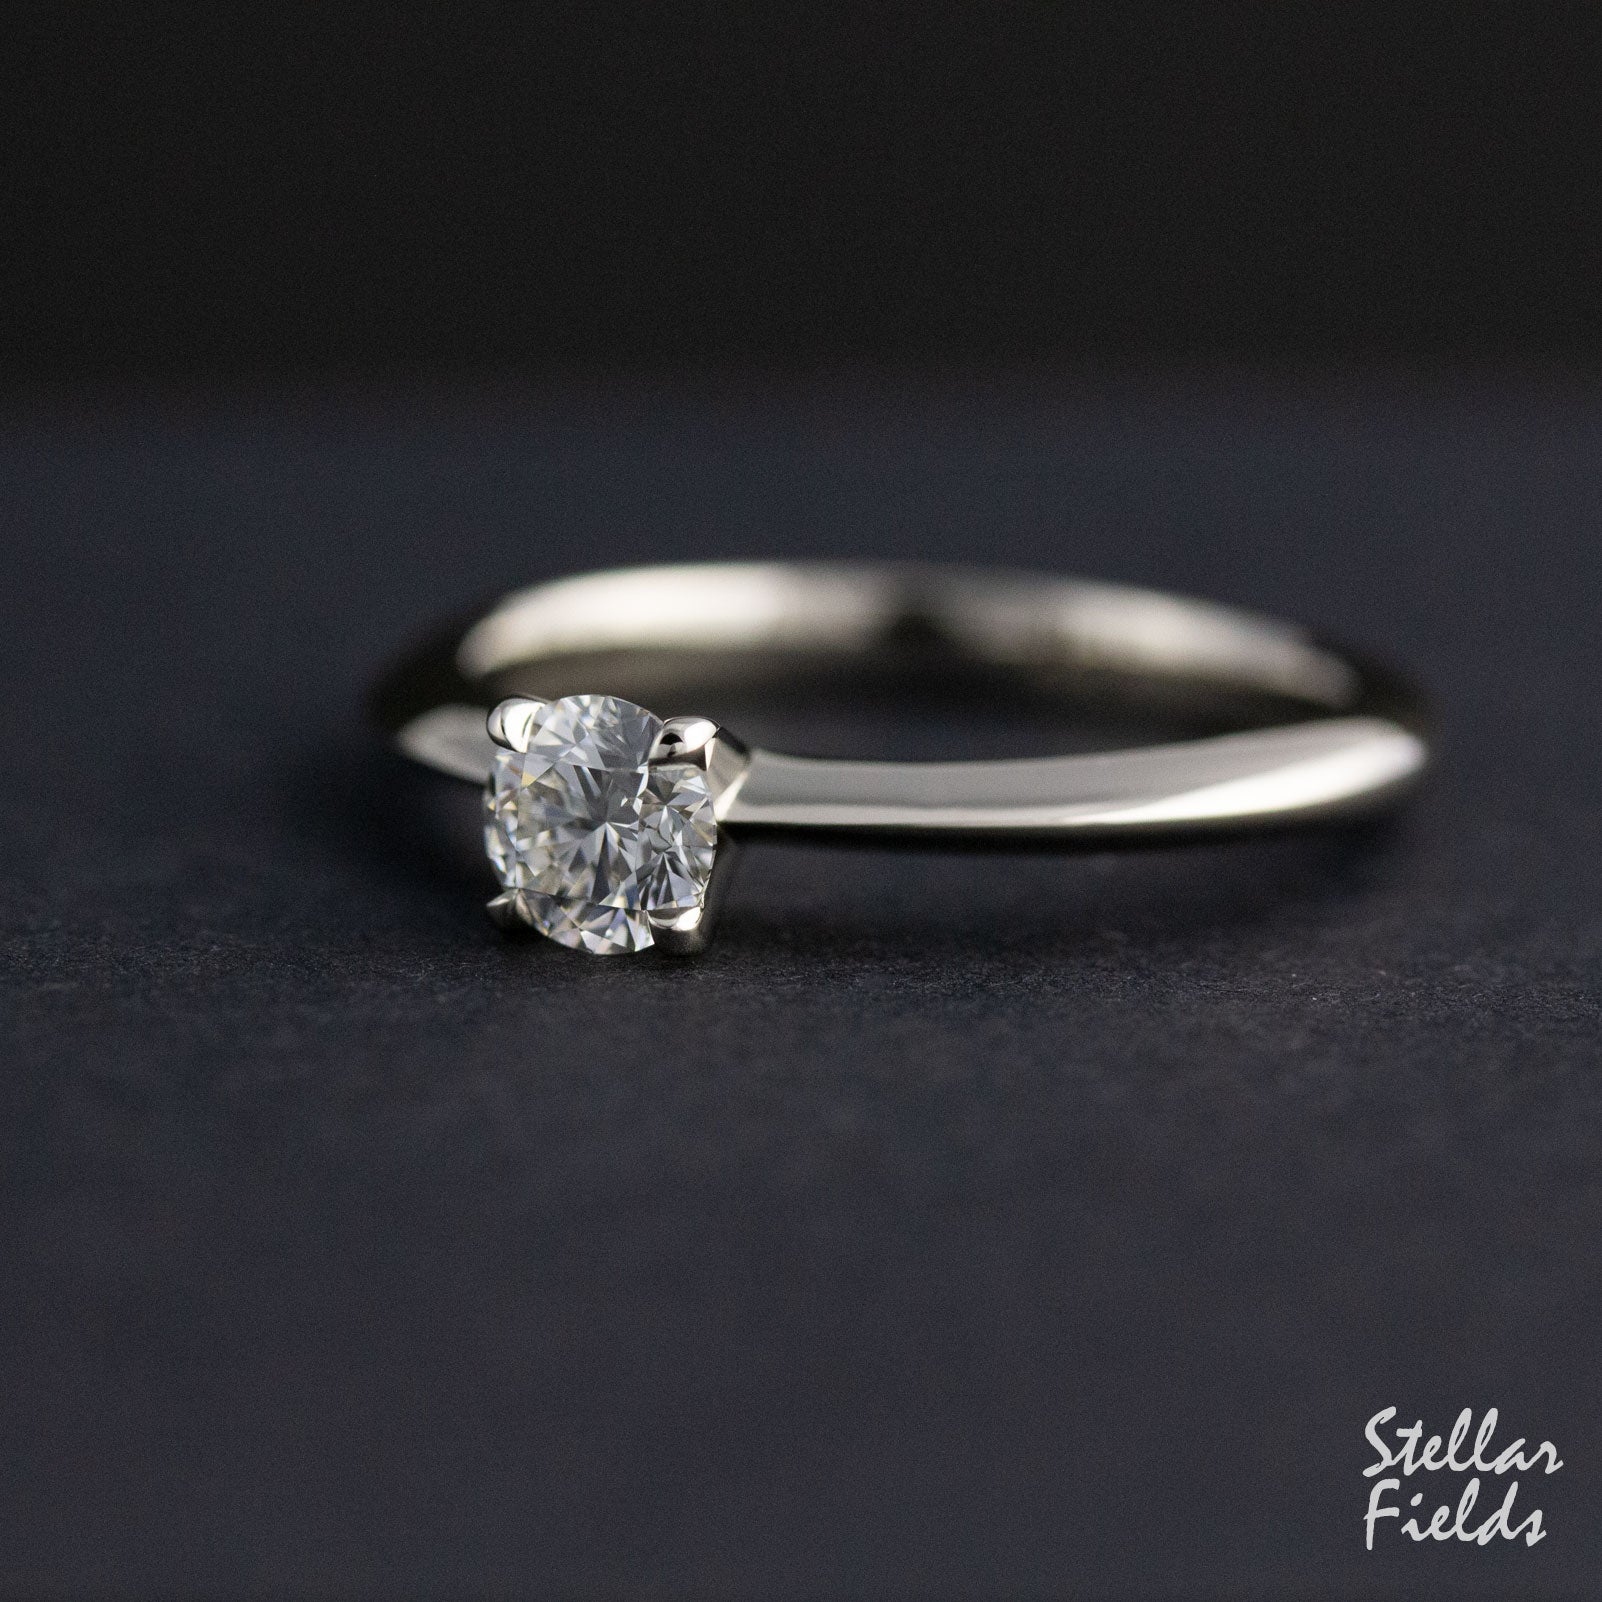 Custom Solitaire Lab Diamond Engagement Ring Handcrafted Stellar Field